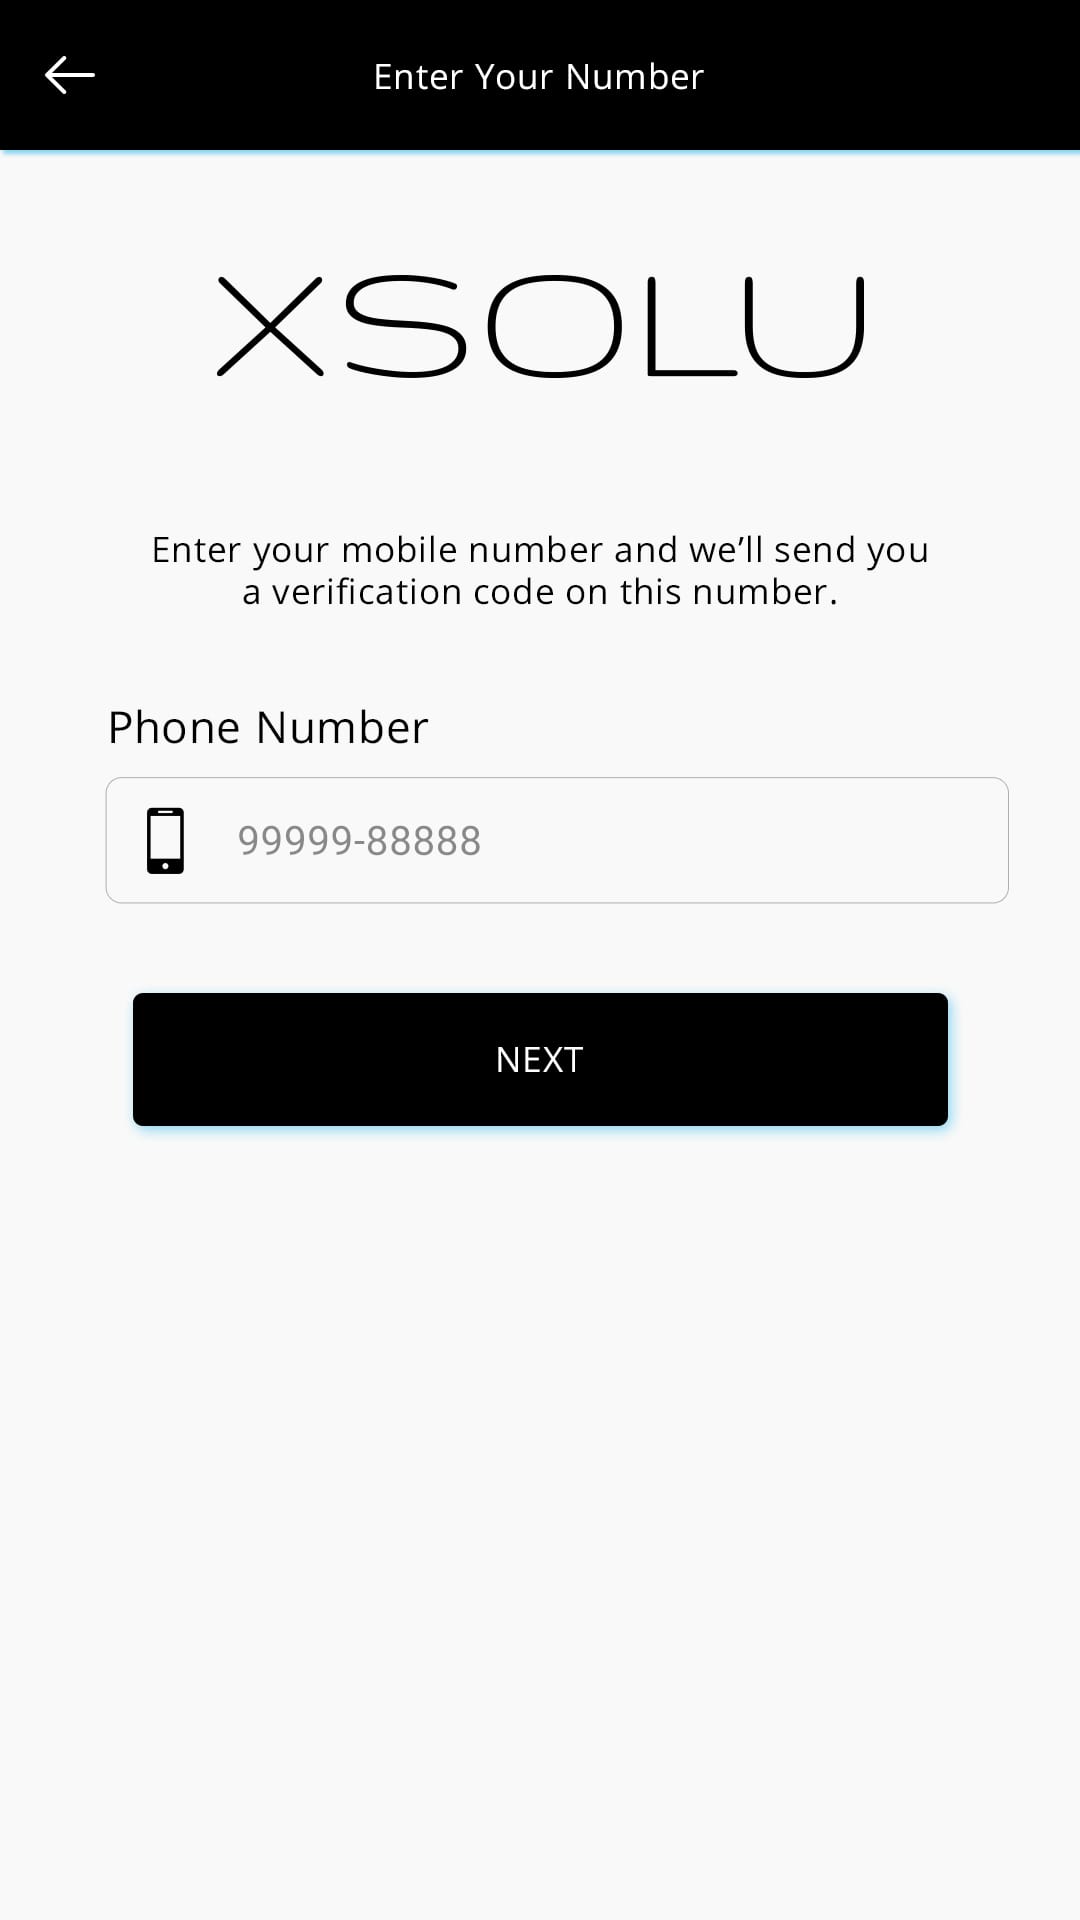 X Solu (ride sharing app) Mobile Number screen